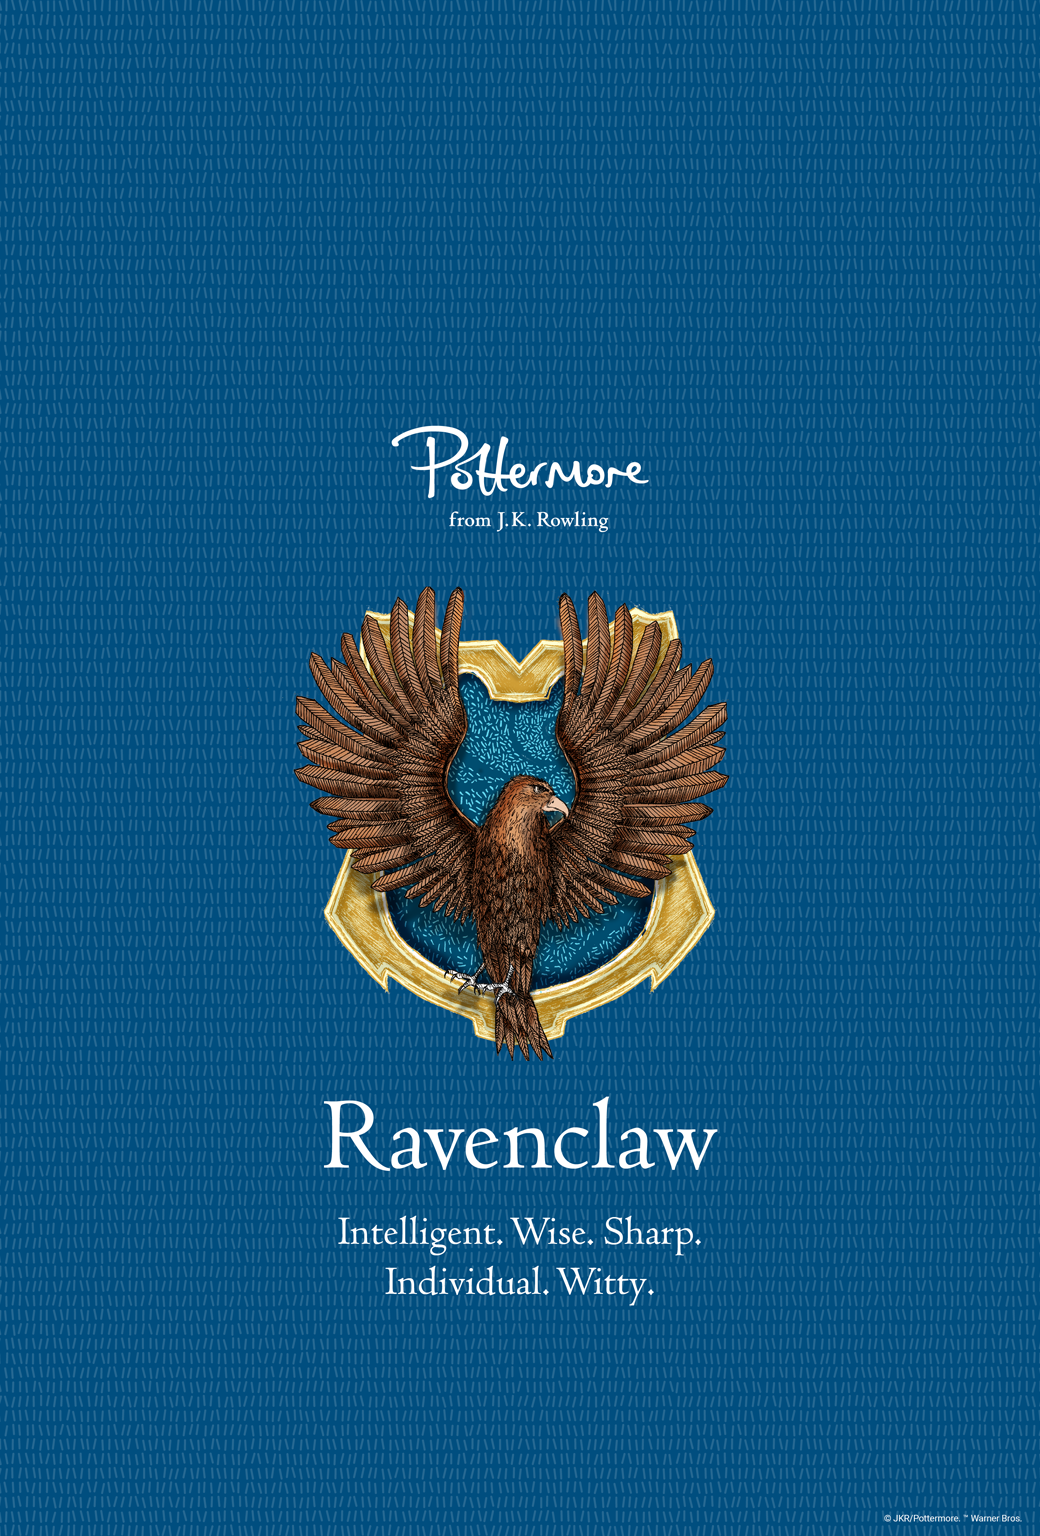 Ravenclaw Wallpaper. Keep Calm Ravenclaw Wallpaper, Ravenclaw Wallpaper and Ravenclaw Wallpaper iPad